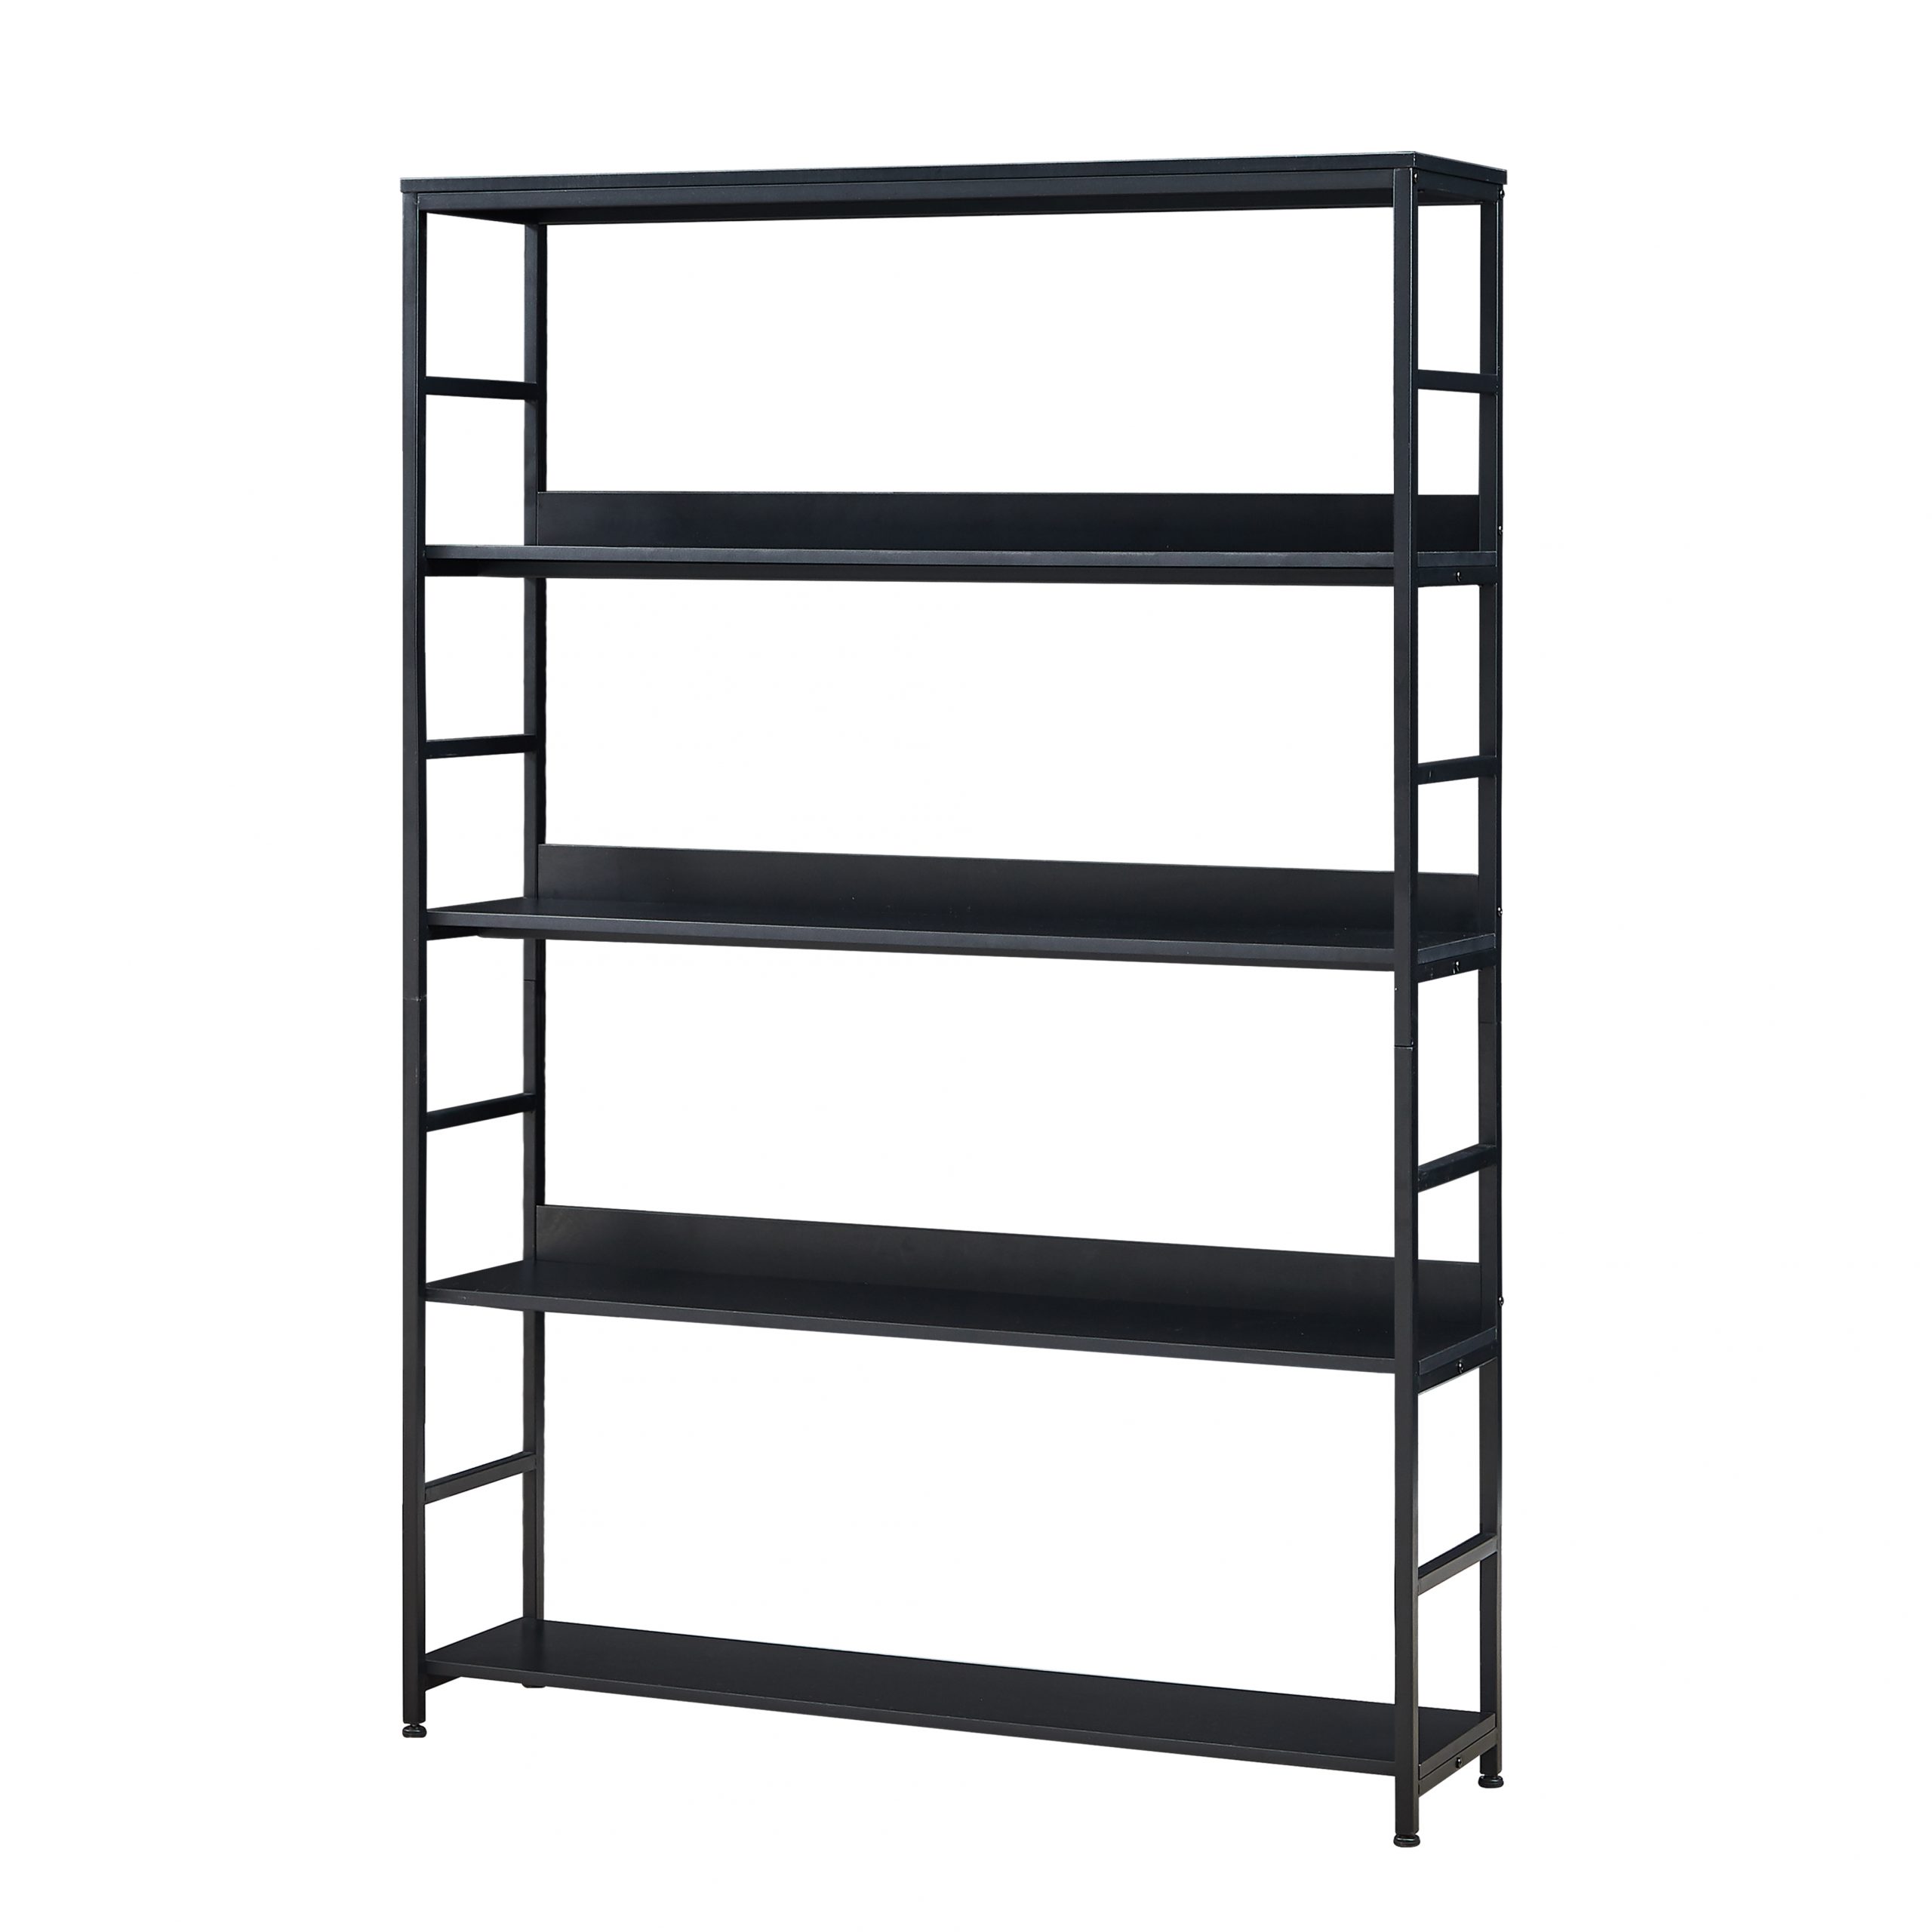 Large 5 Shelf Bookshelf Furniture with Metal Frame - WF286173AAB